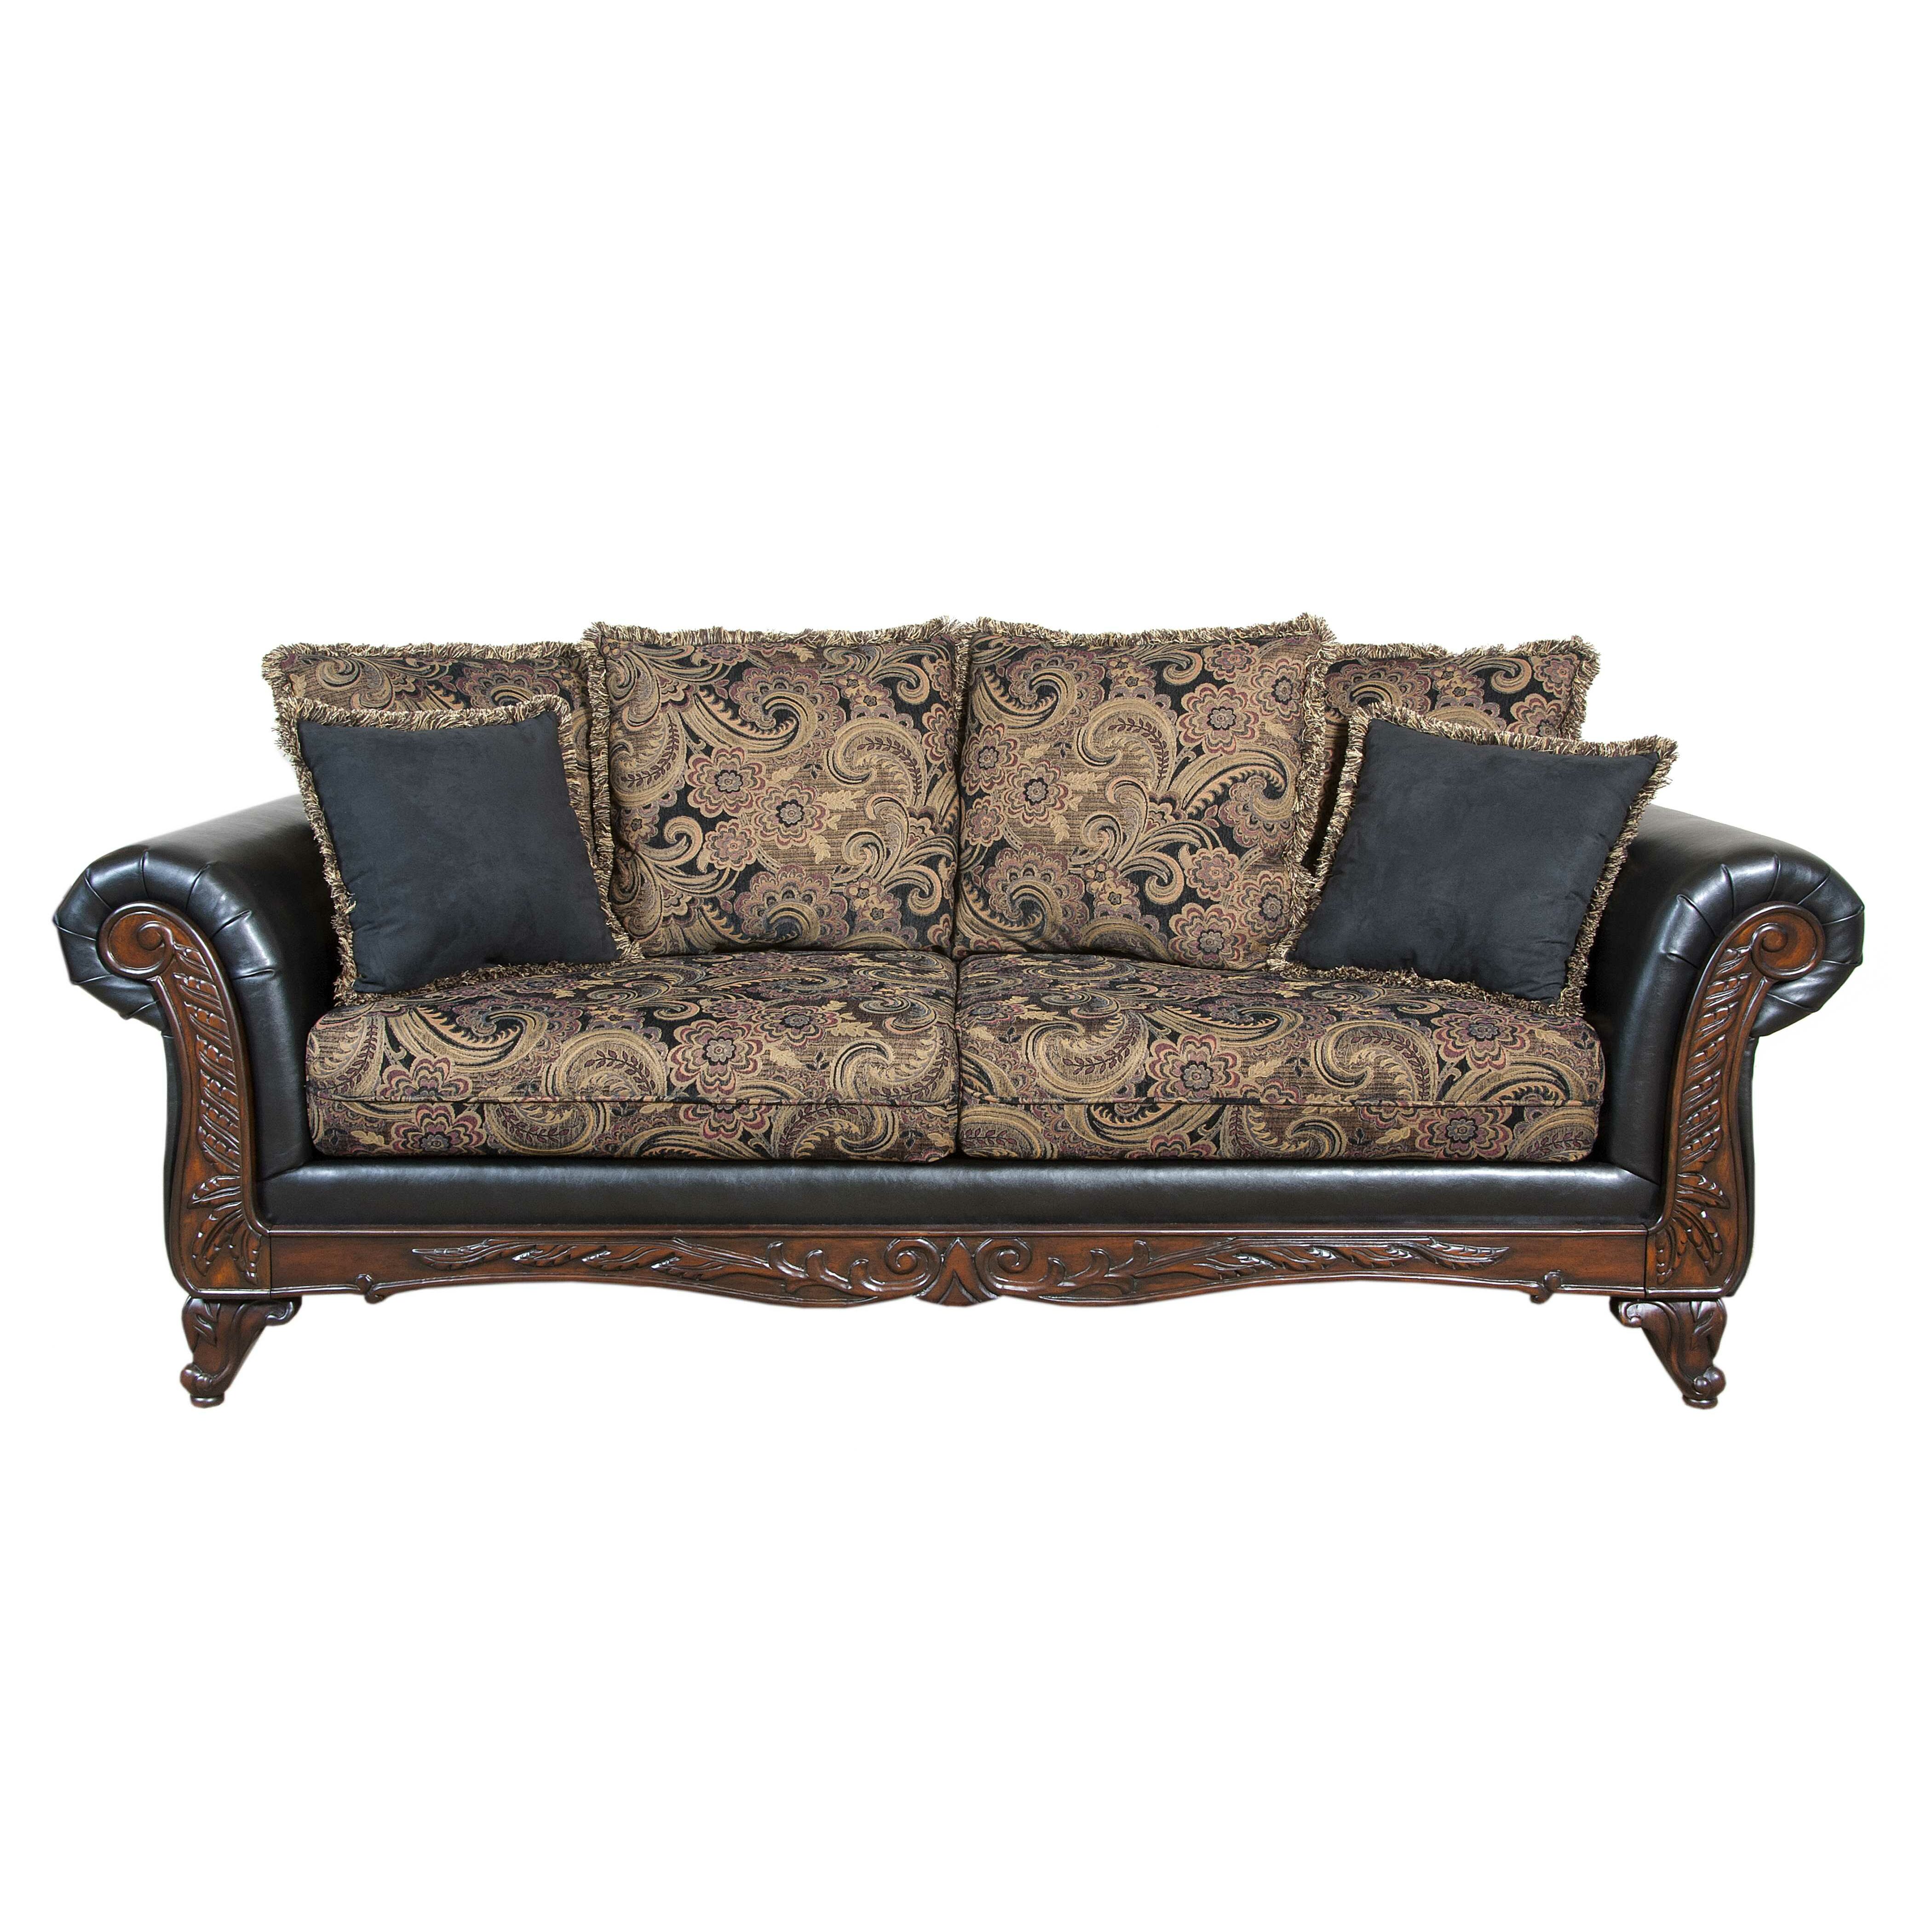 Serta Upholstery Sofa Reviews Wayfair